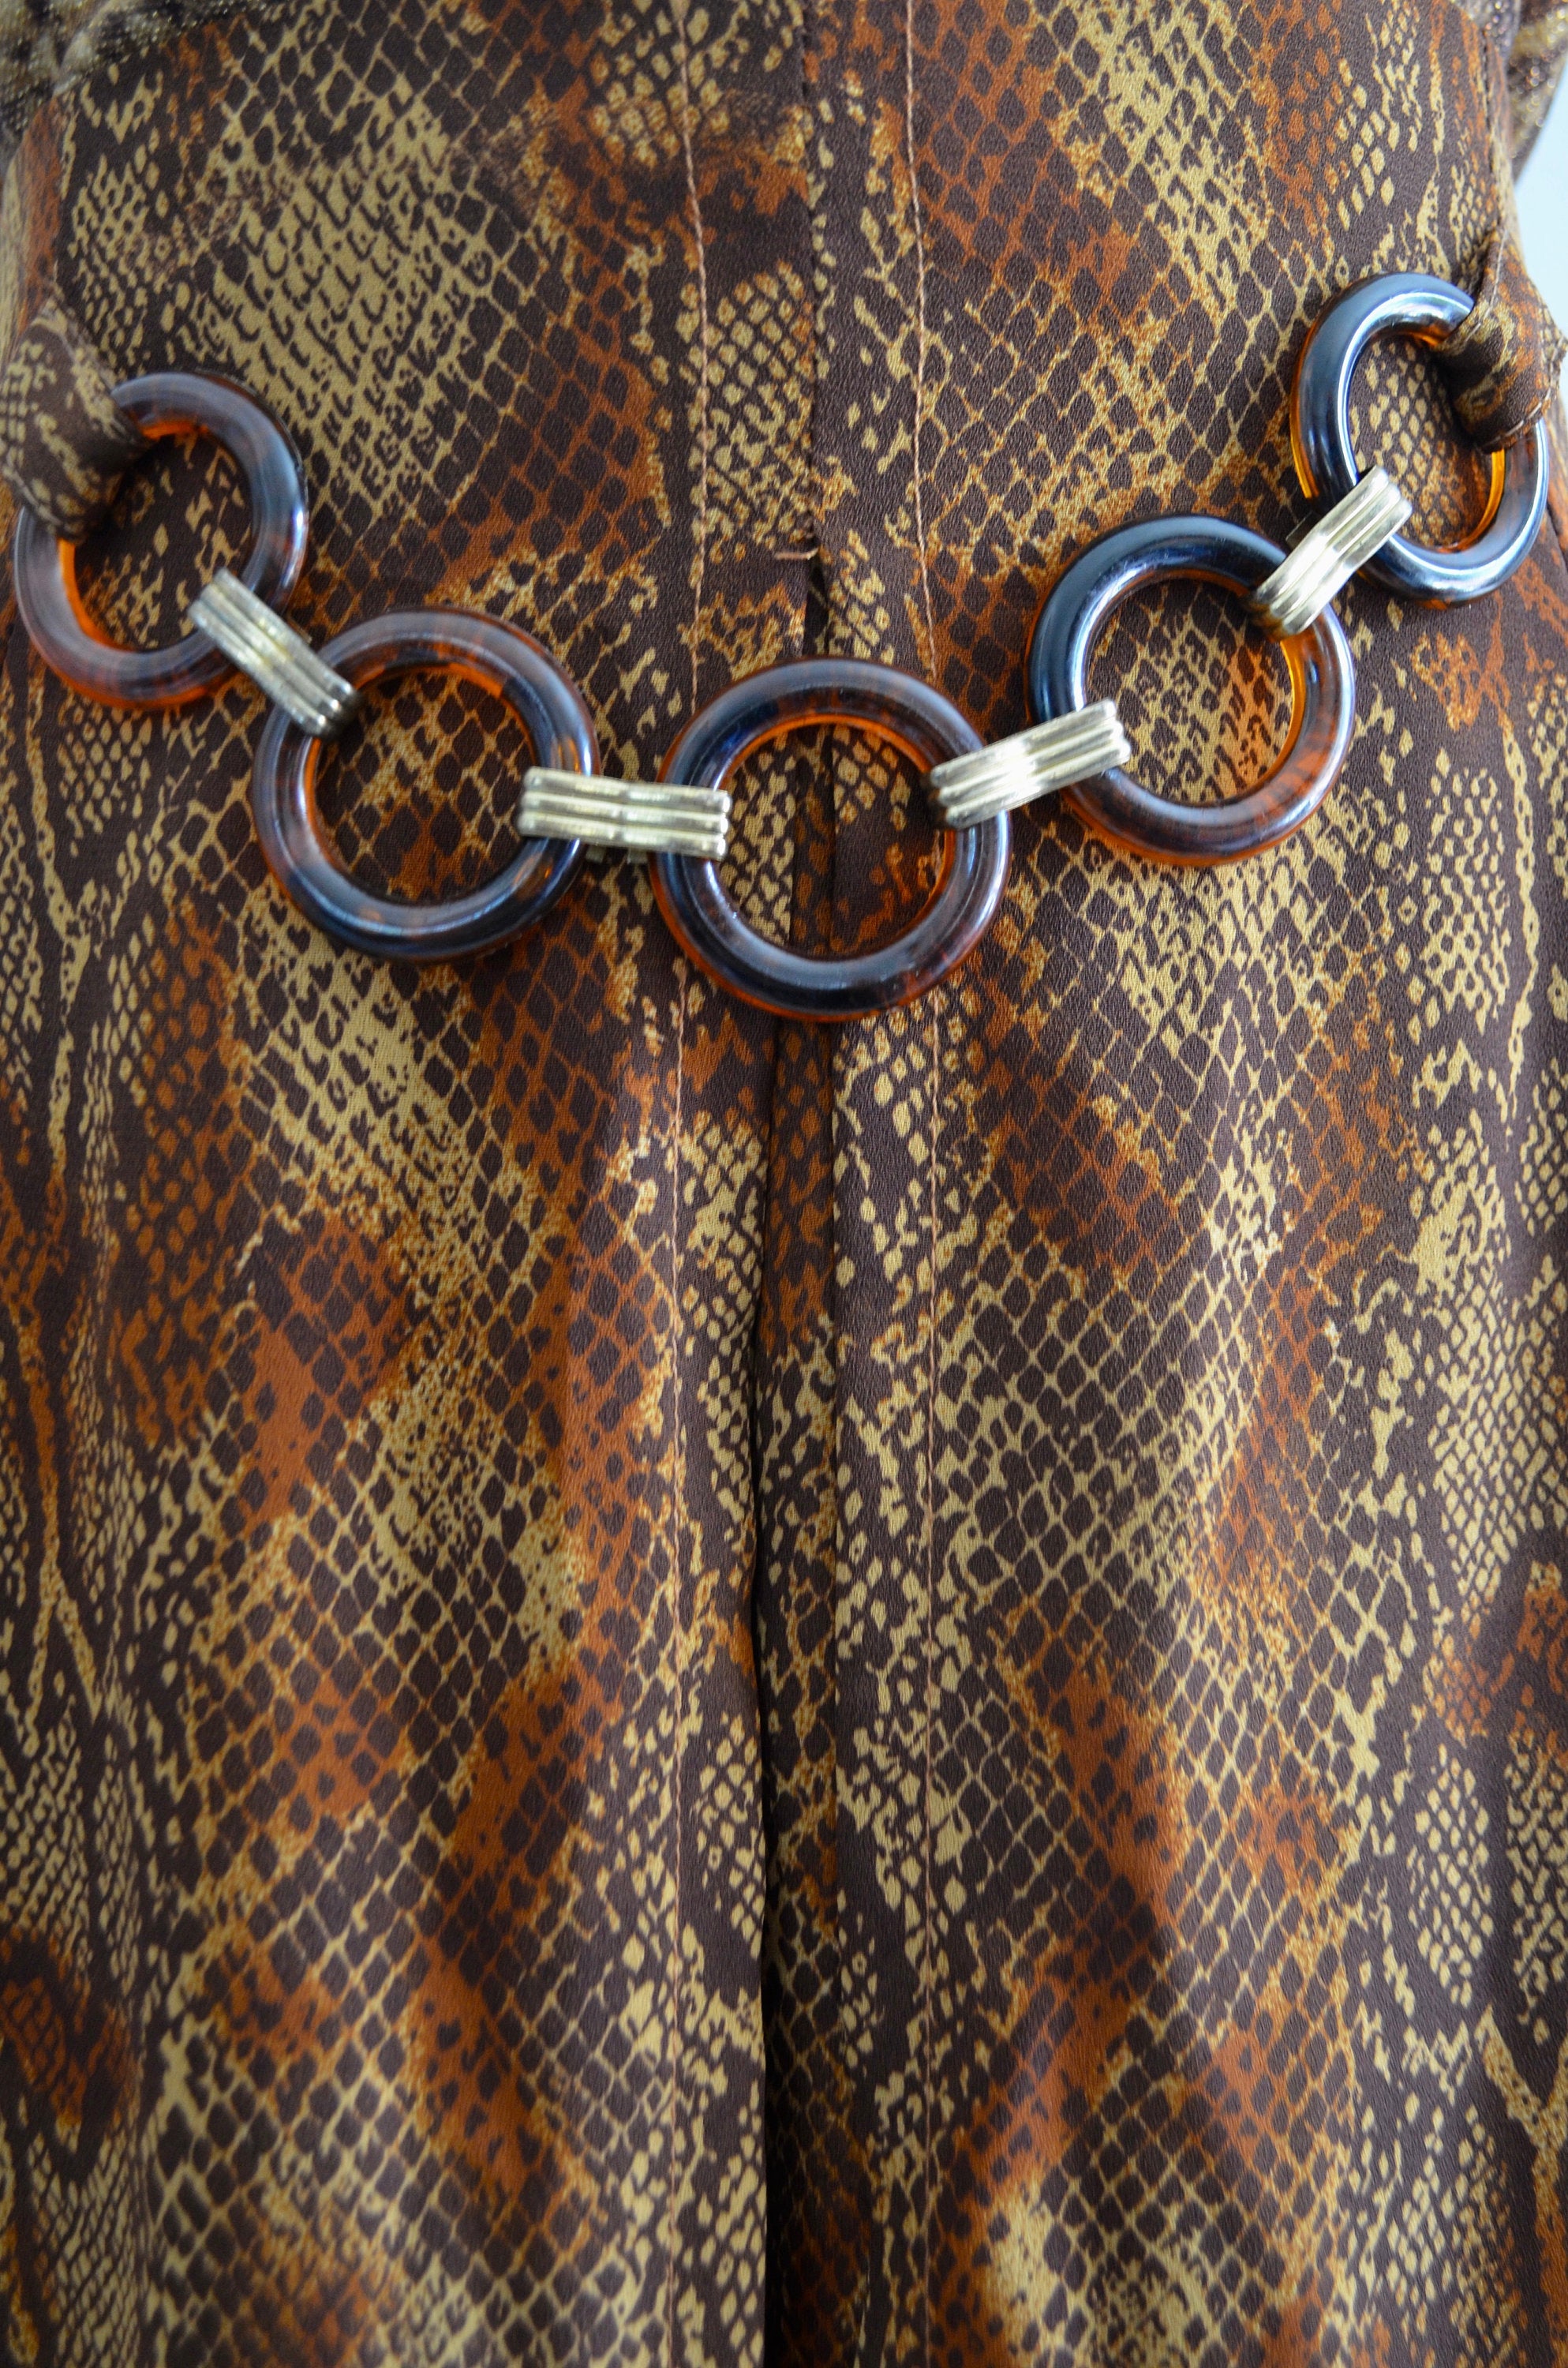 Snake Print Palazzo Wrap Pantalon Trousers Pants With Chain Belt Matching Metallic Lurex Croco Top